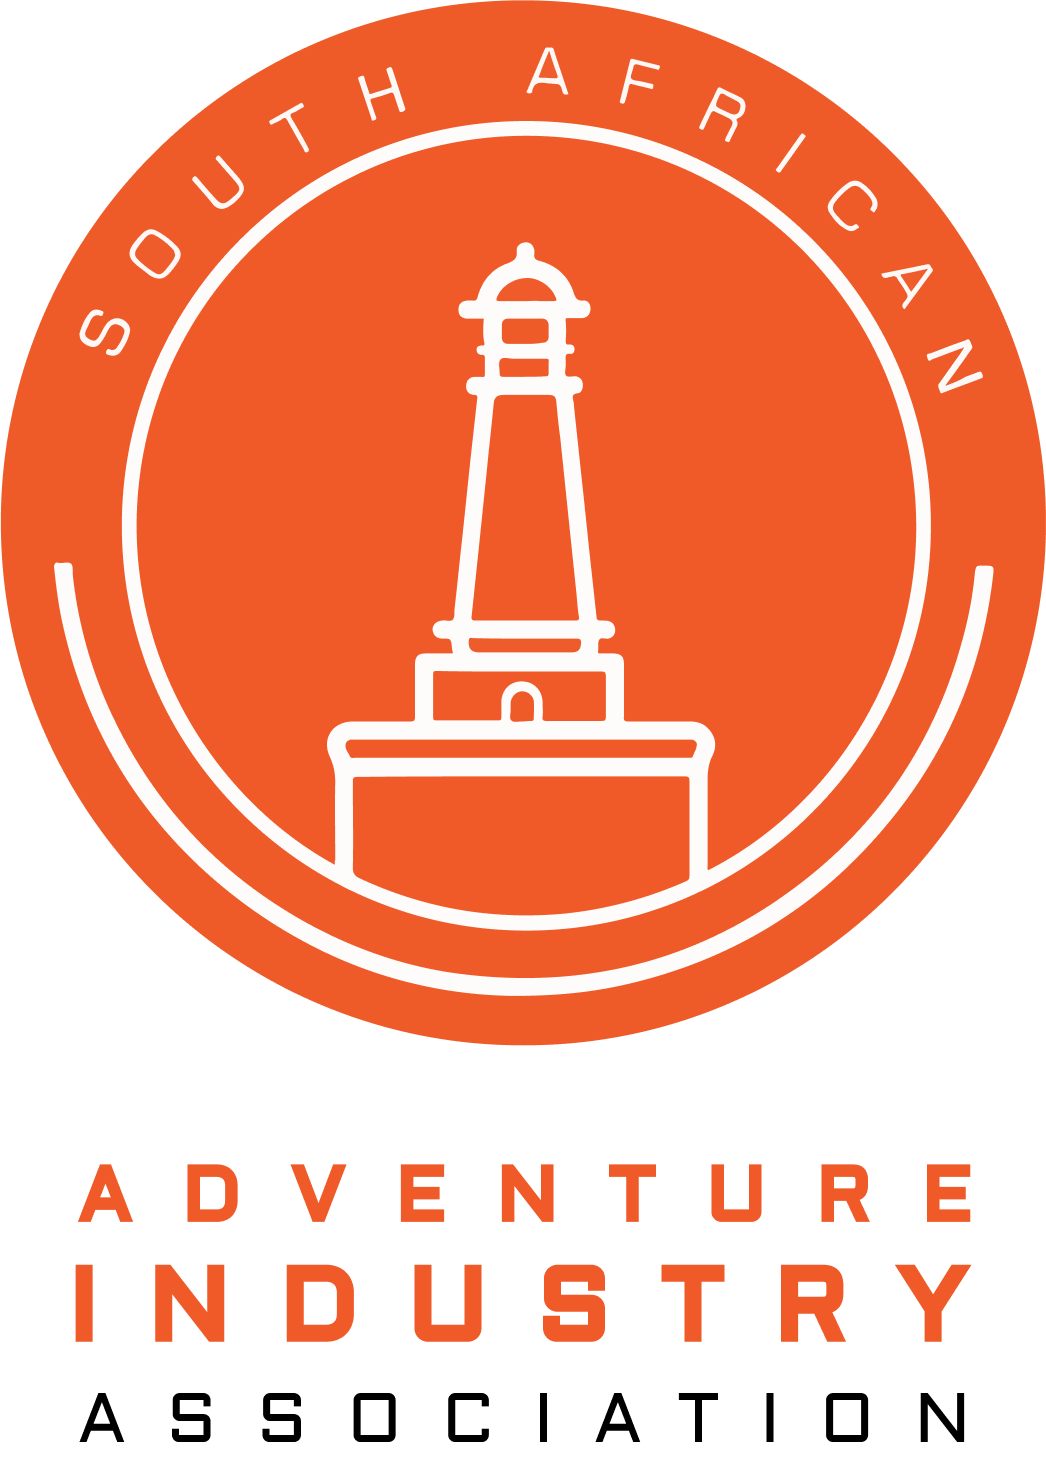 Adventure Industry Association